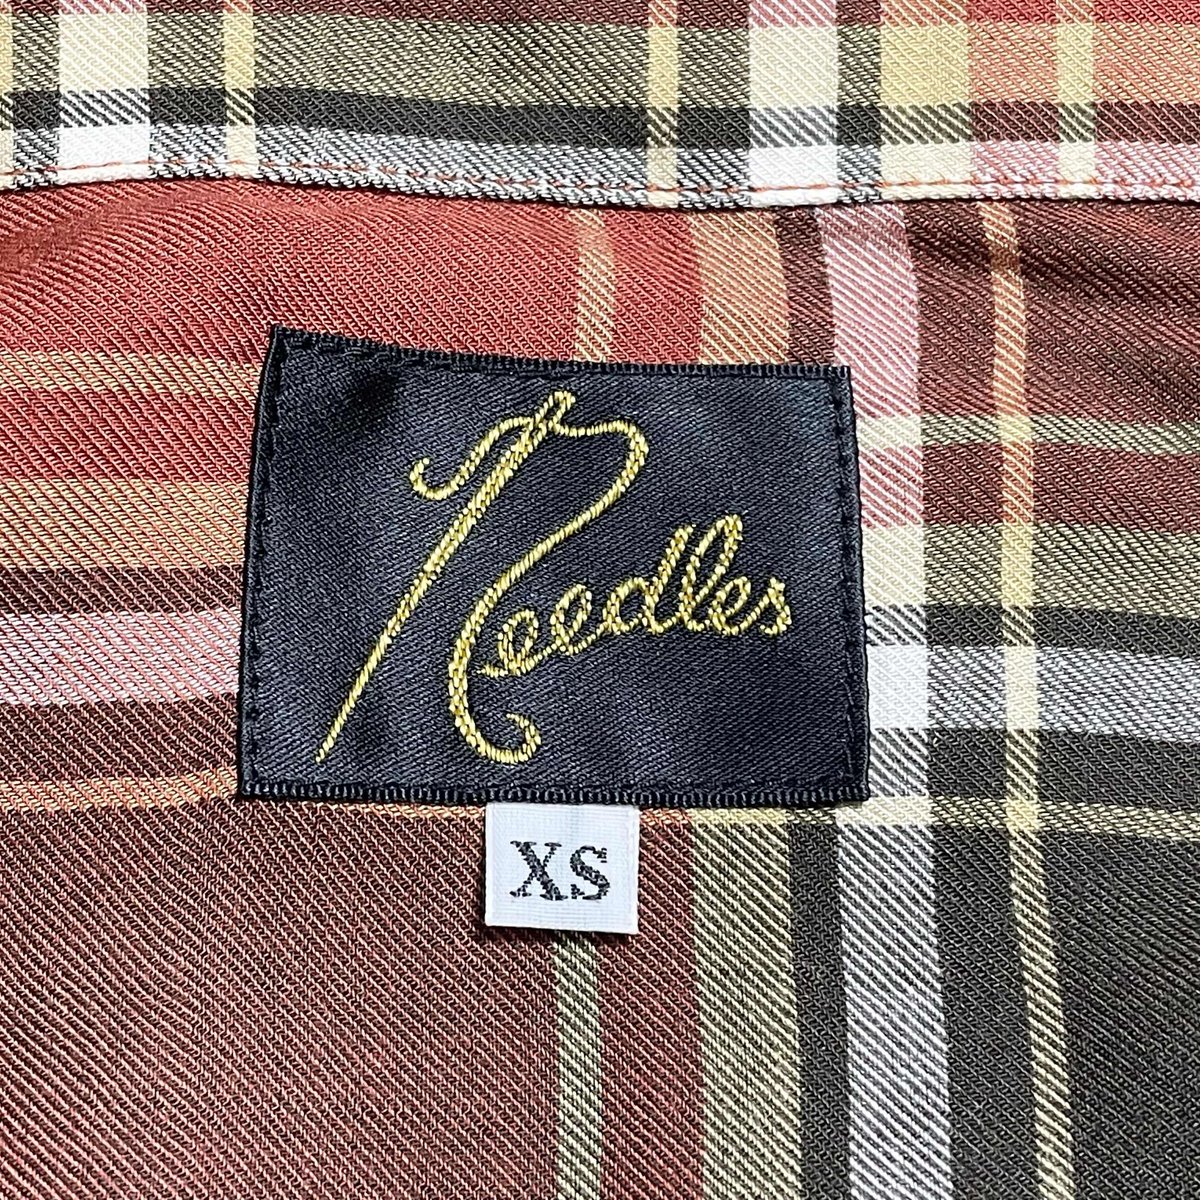 MADE IN JAPAN製 Needles 長袖チェックシャツ ブラウン XSサイズ | U...